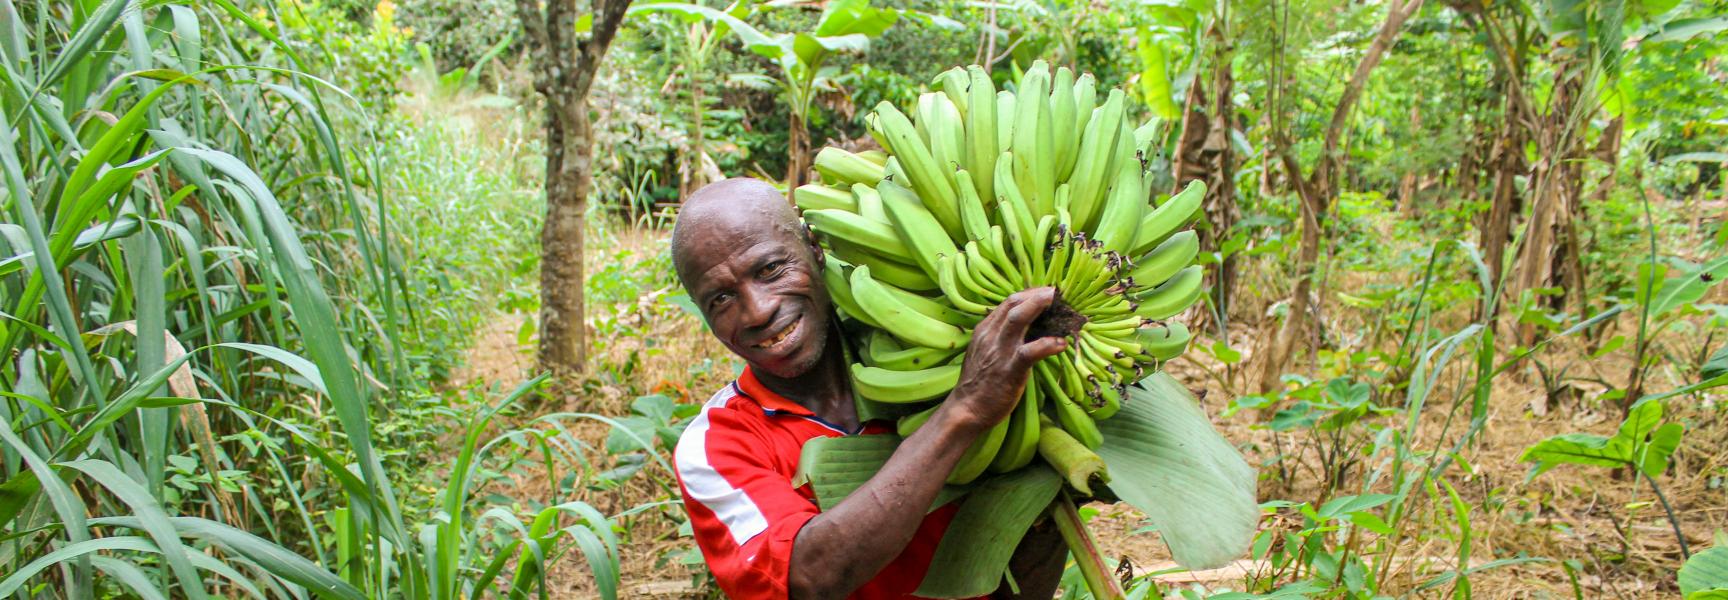 Harvesting bananas in Ghana